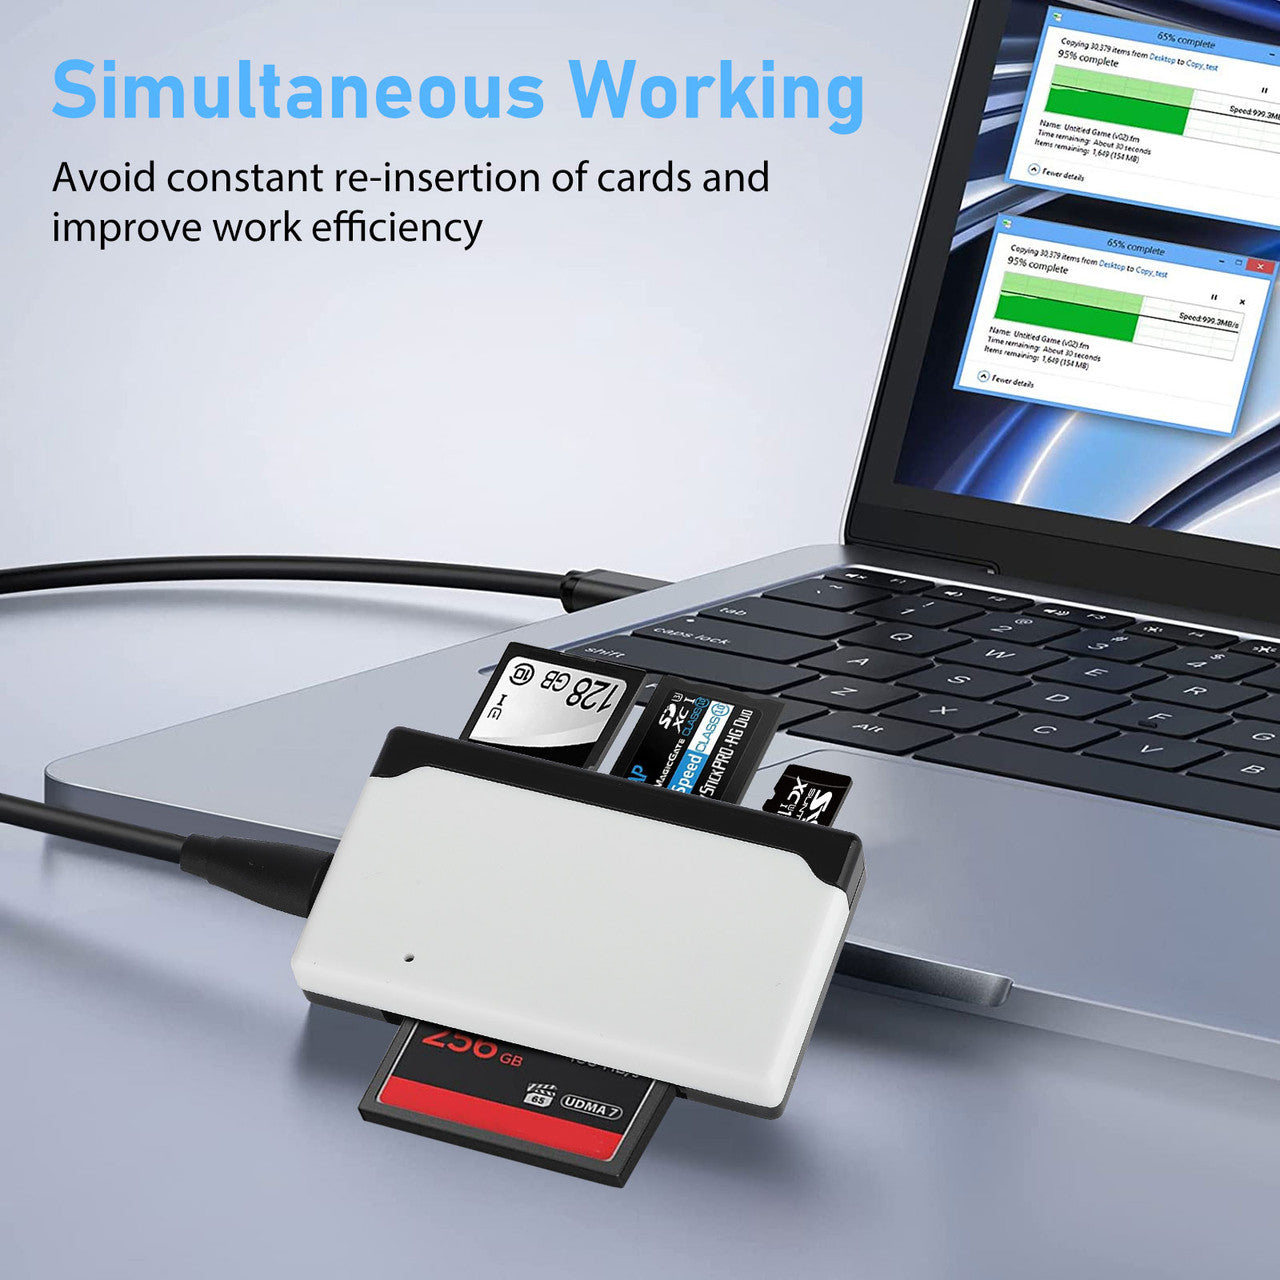 6-in-1 Memory Card Reader - Designed for 4 Card Slots Compatible with Laptops Desktops